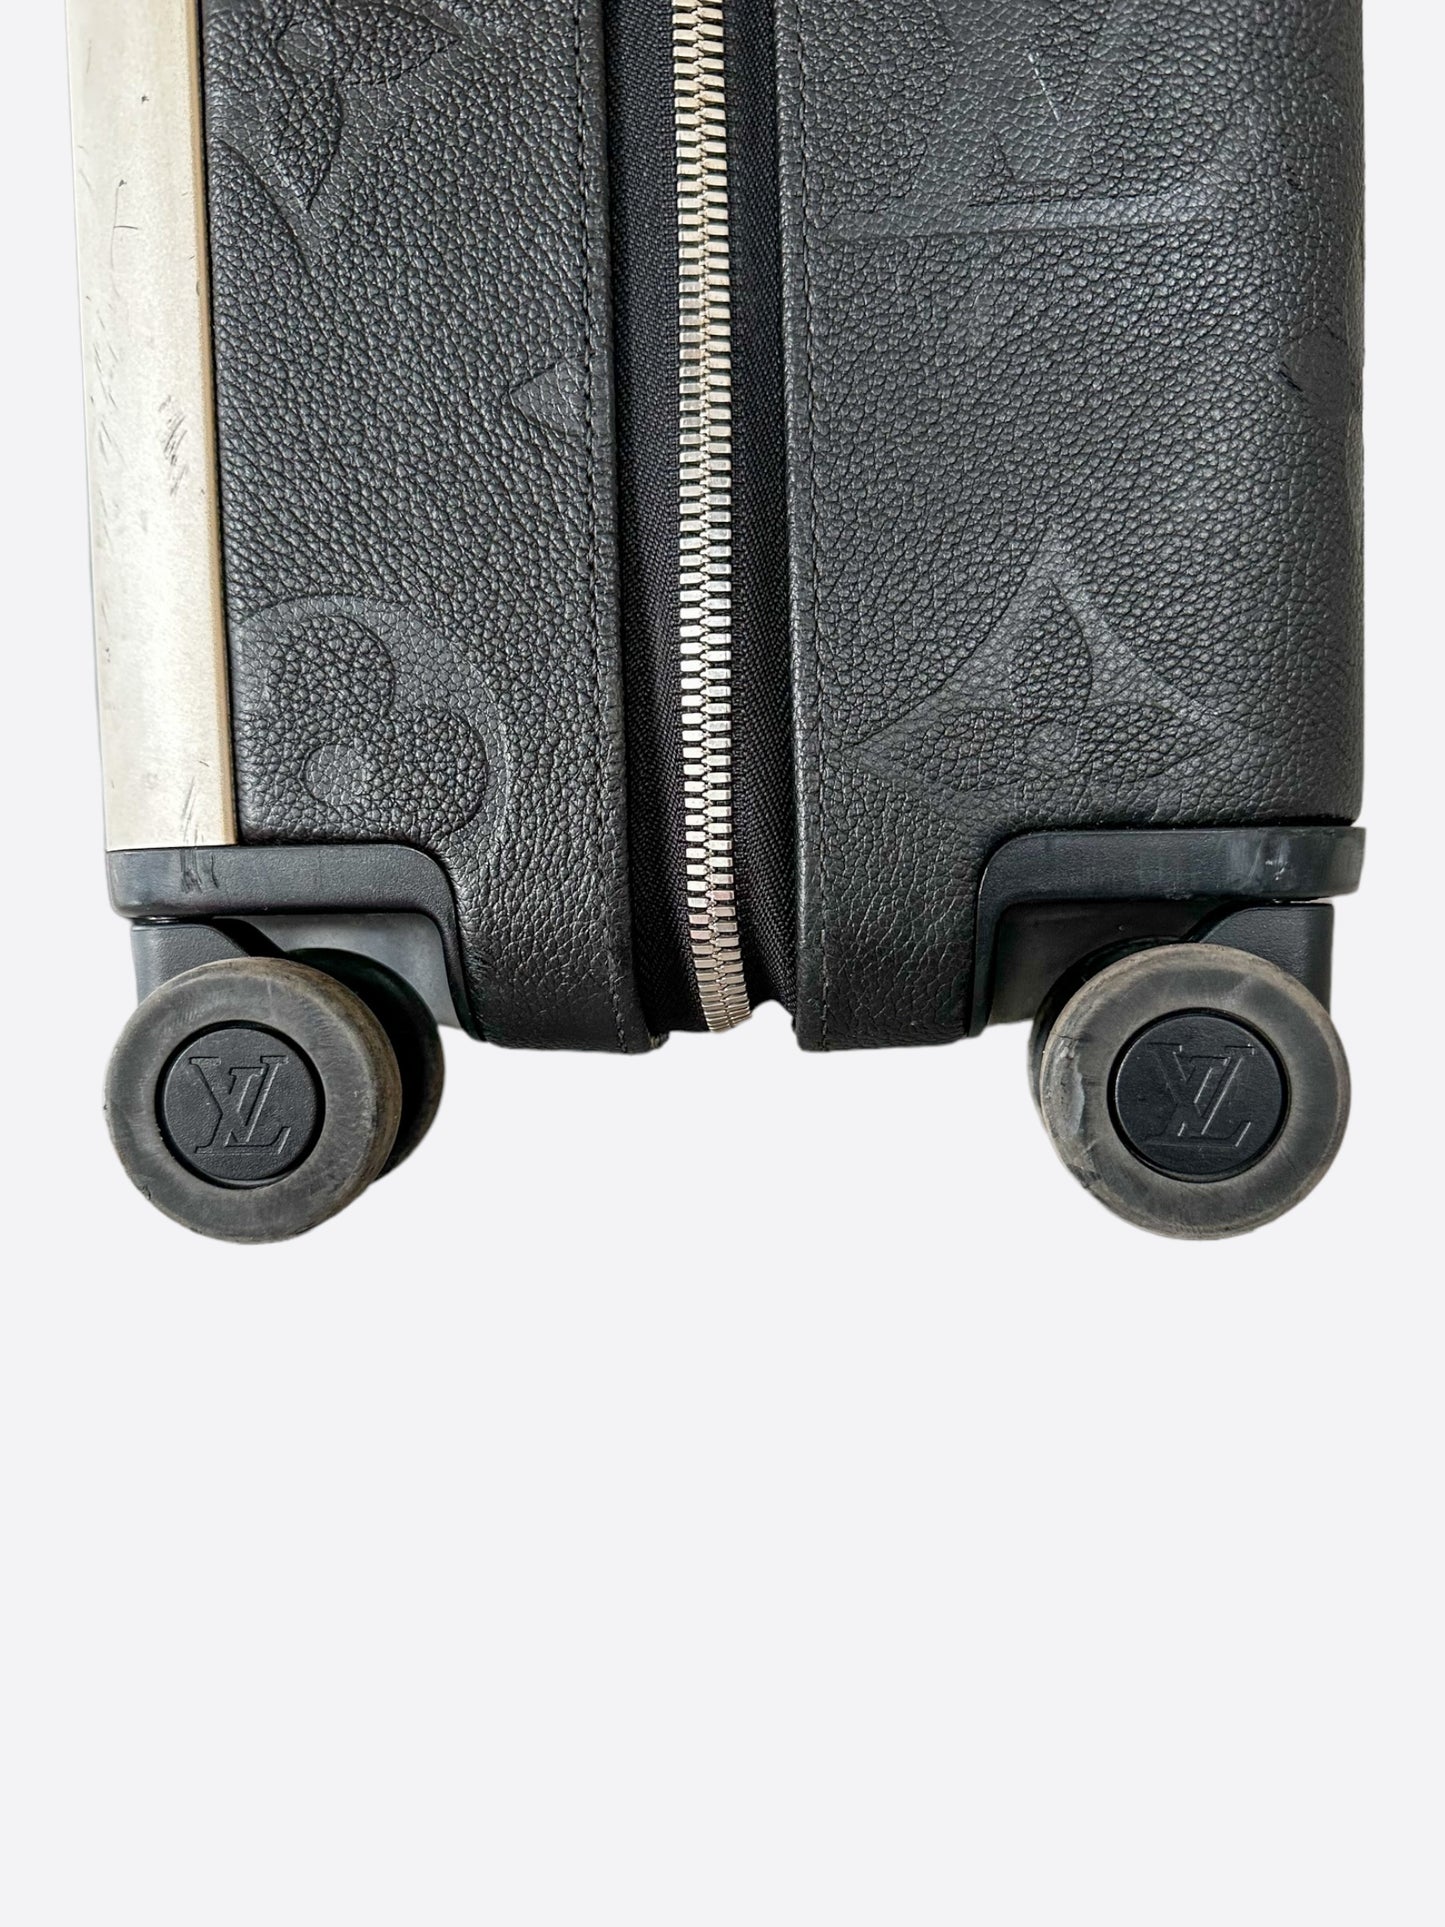 Louis Vuitton Black Empreinte Monogram Horizon 55 Suitcase